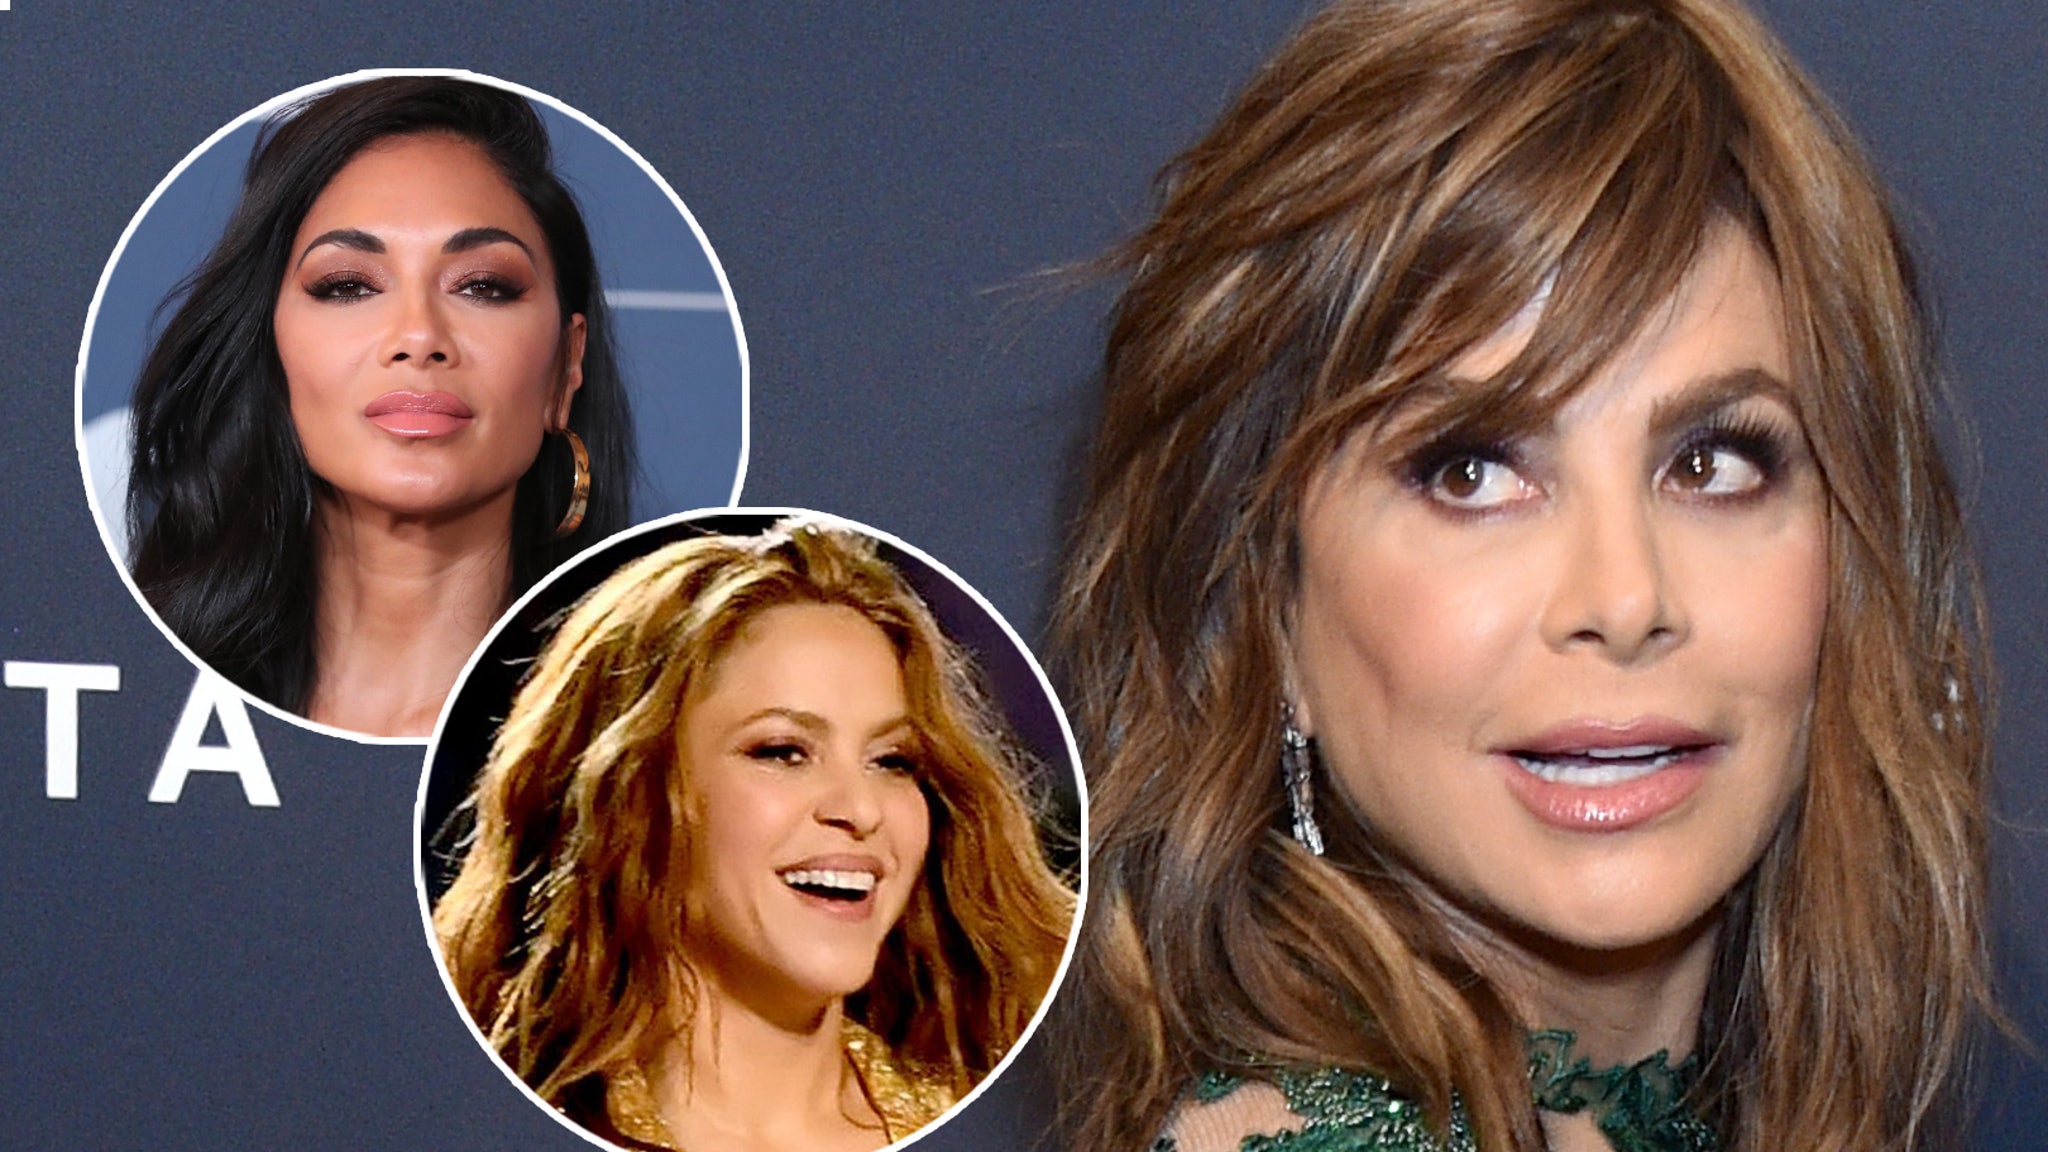 Paula Abdul Confuses Nicole Scherzinger for Shakira in Super Bowl Tweet